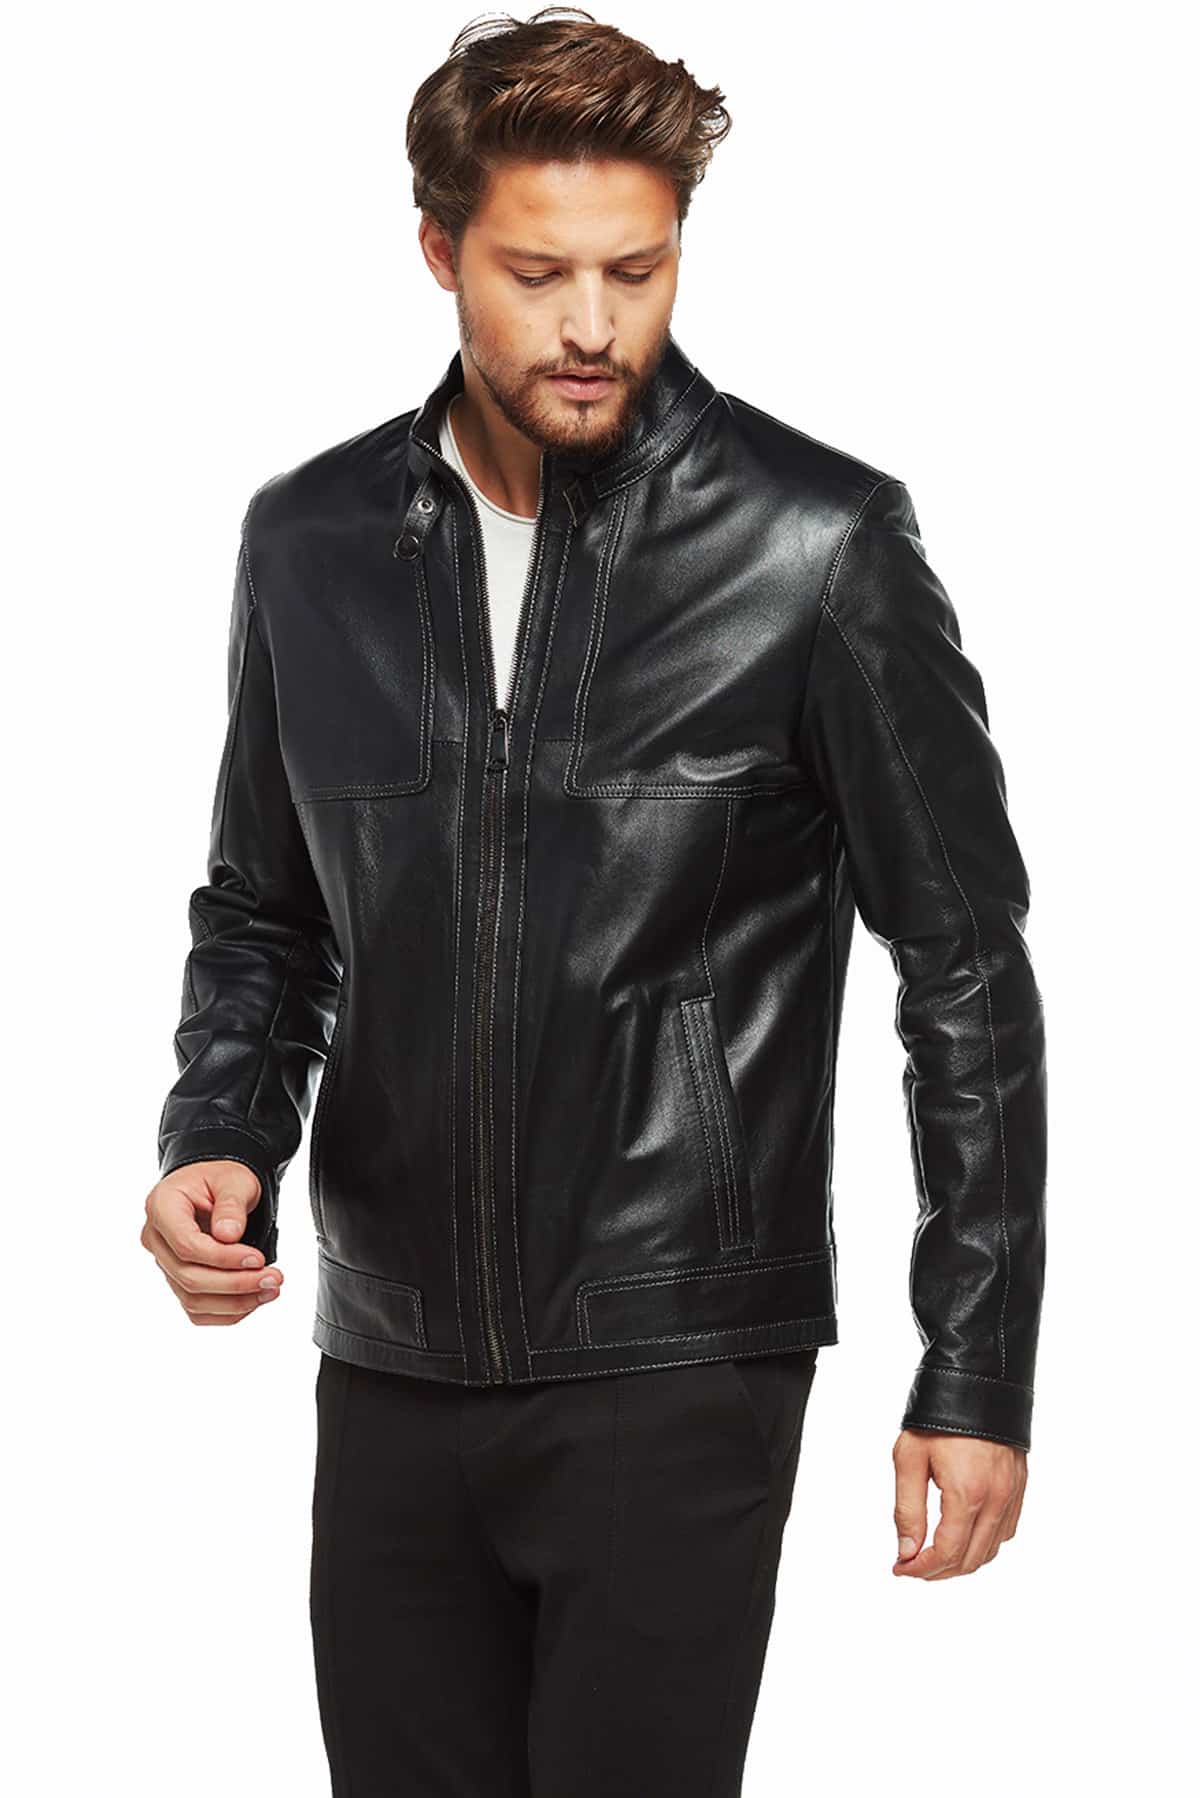 men's leather coats